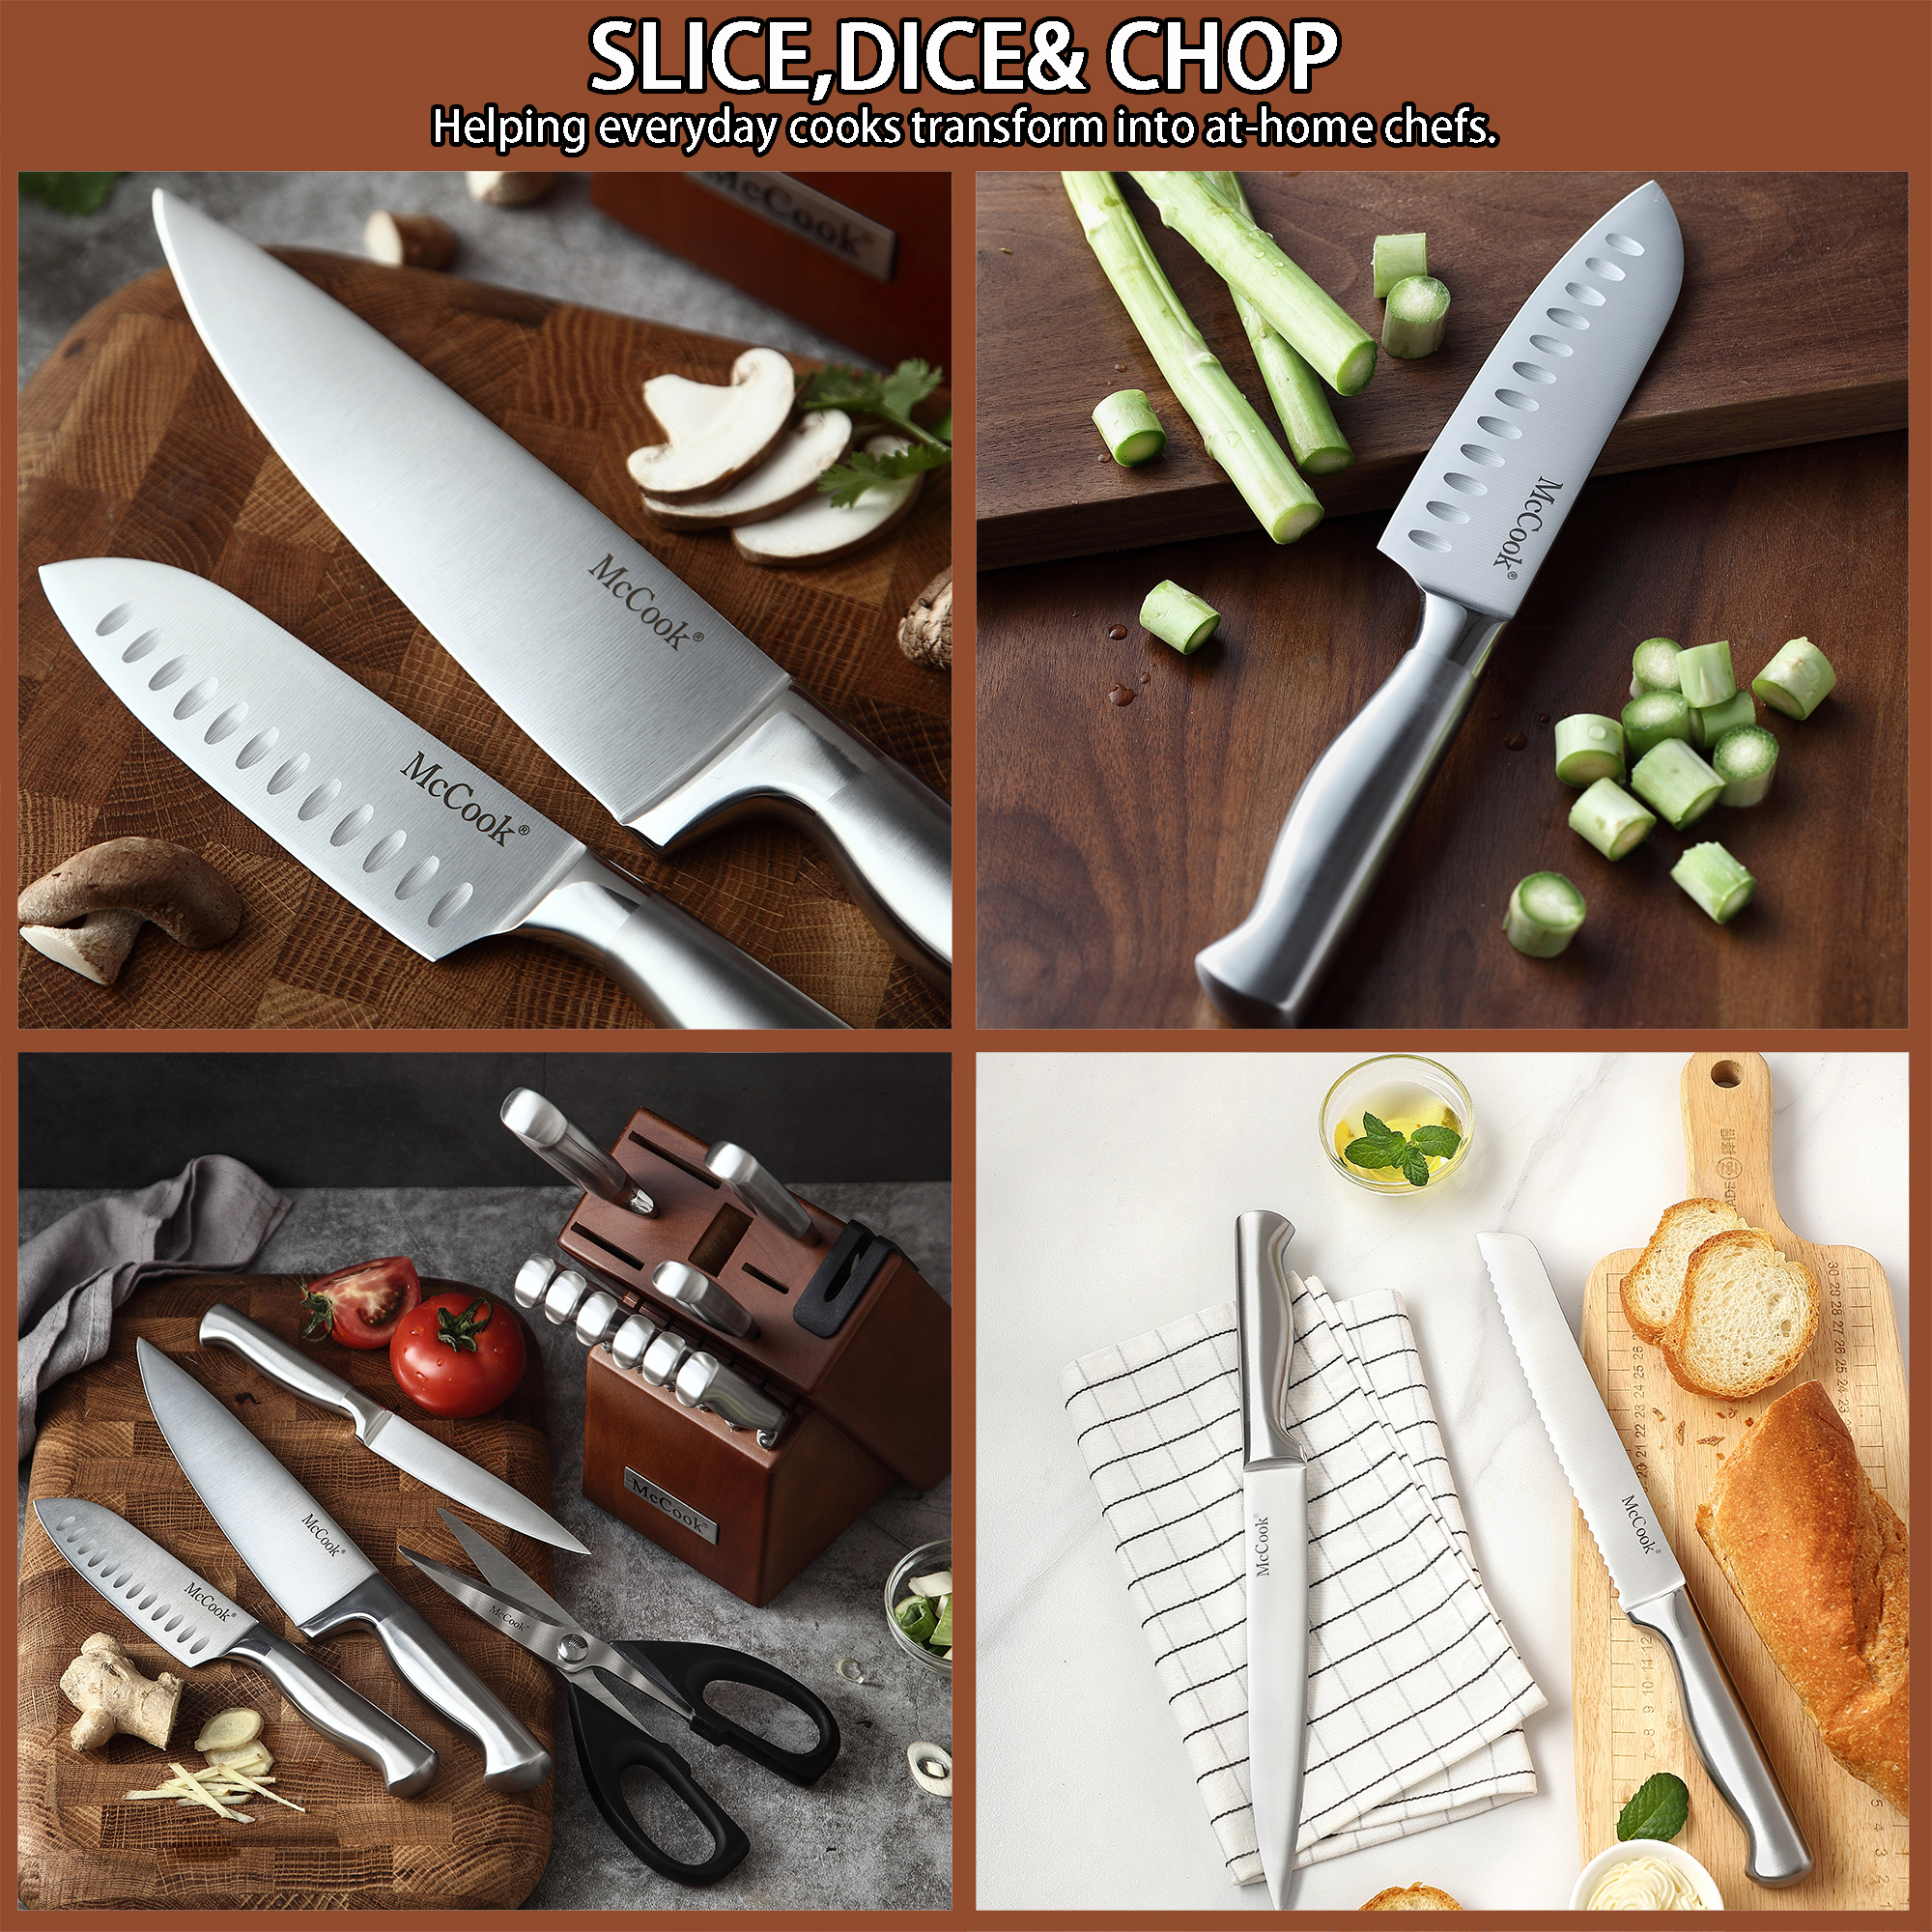 McCook MC29 15-Piece Kitchen Cutlery Knife Block Set Built-in Sharpener Stainless Steel - image 5 of 11